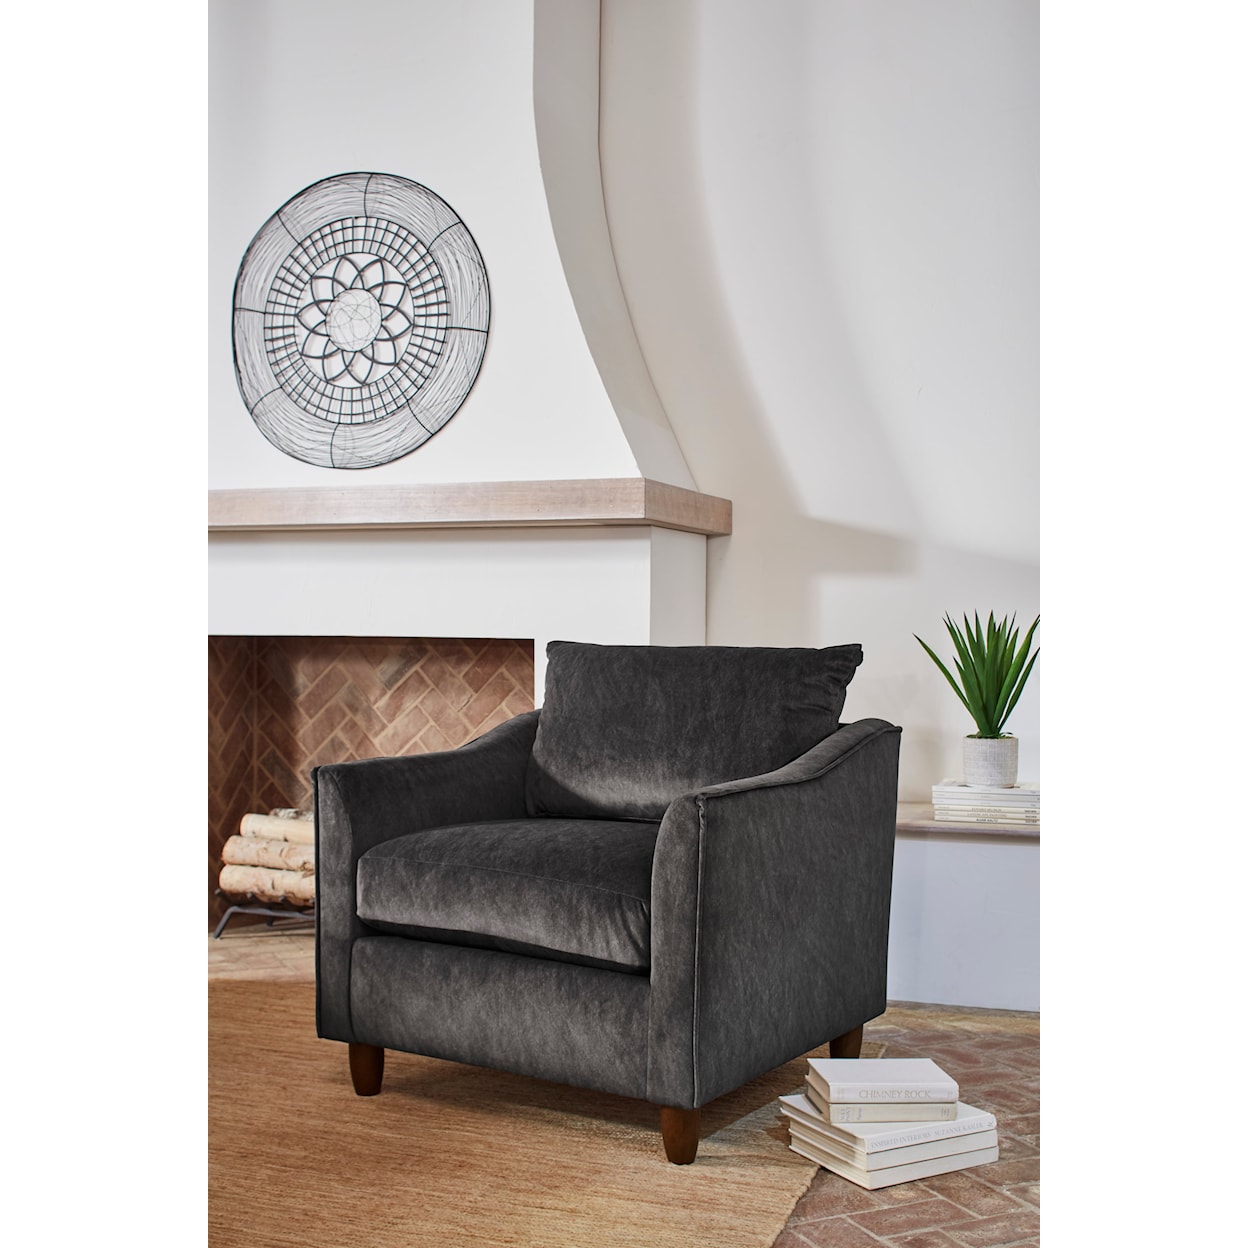 Best Home Furnishings Kimantha Stationary Chair